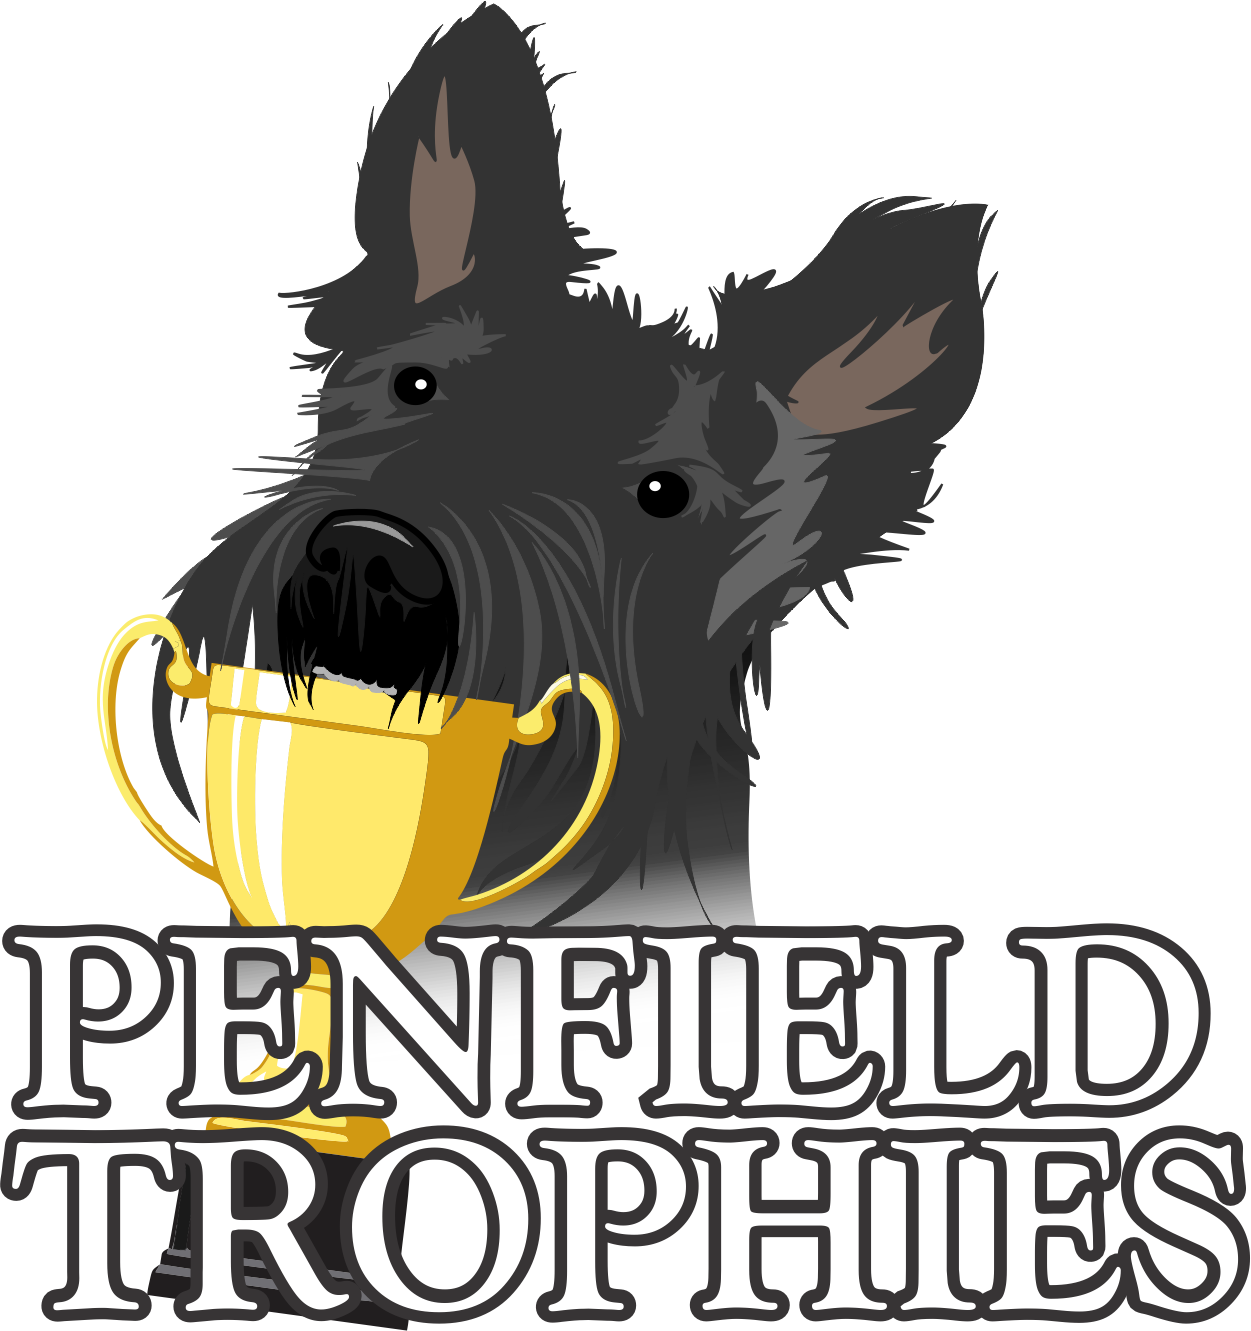 Penfield Trophies